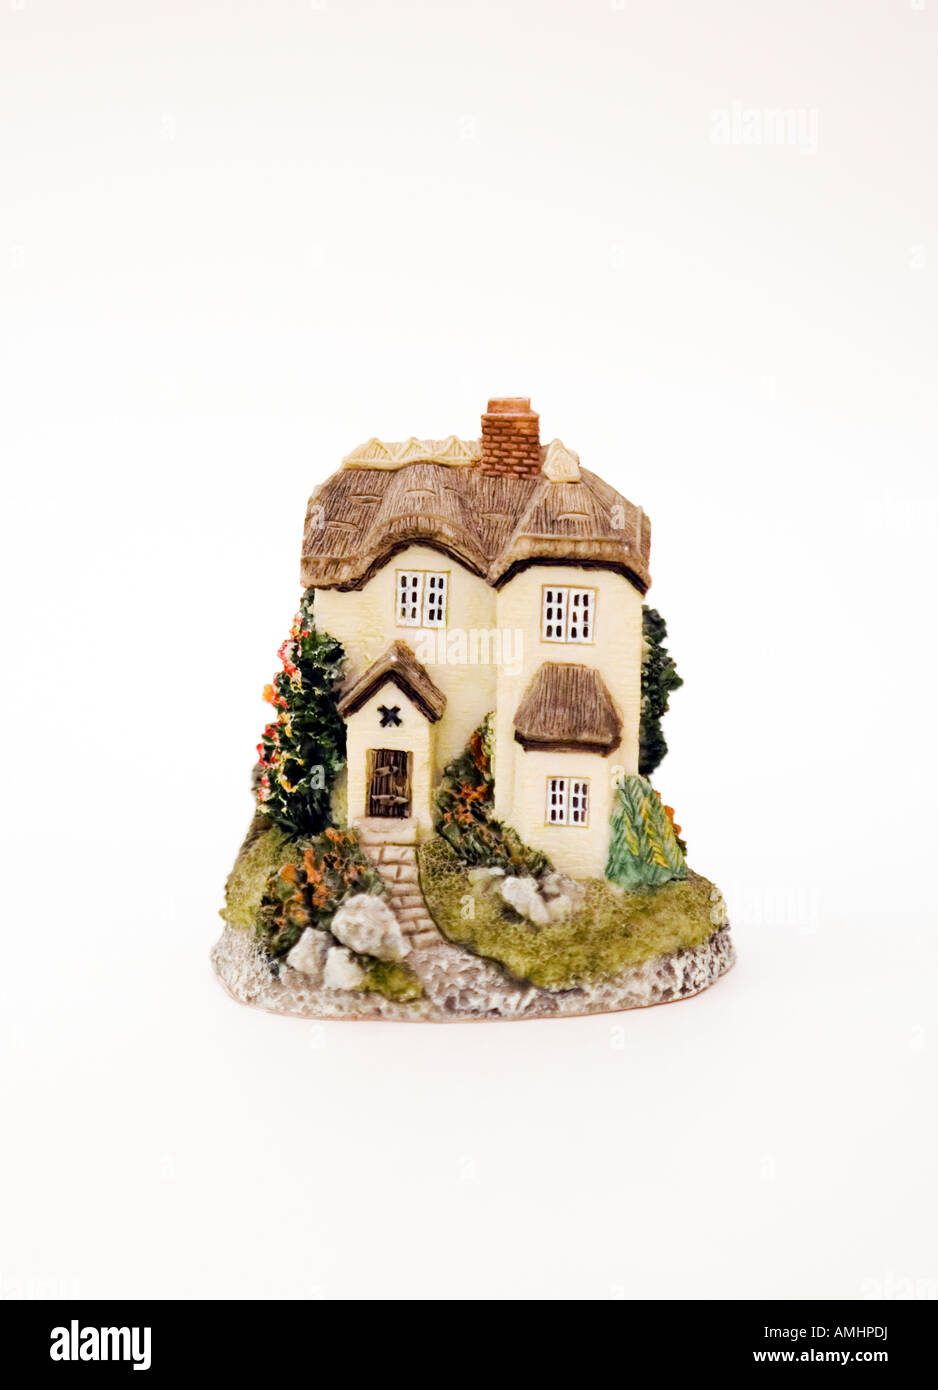 Model house / cottage ornament on white background Stock Photo